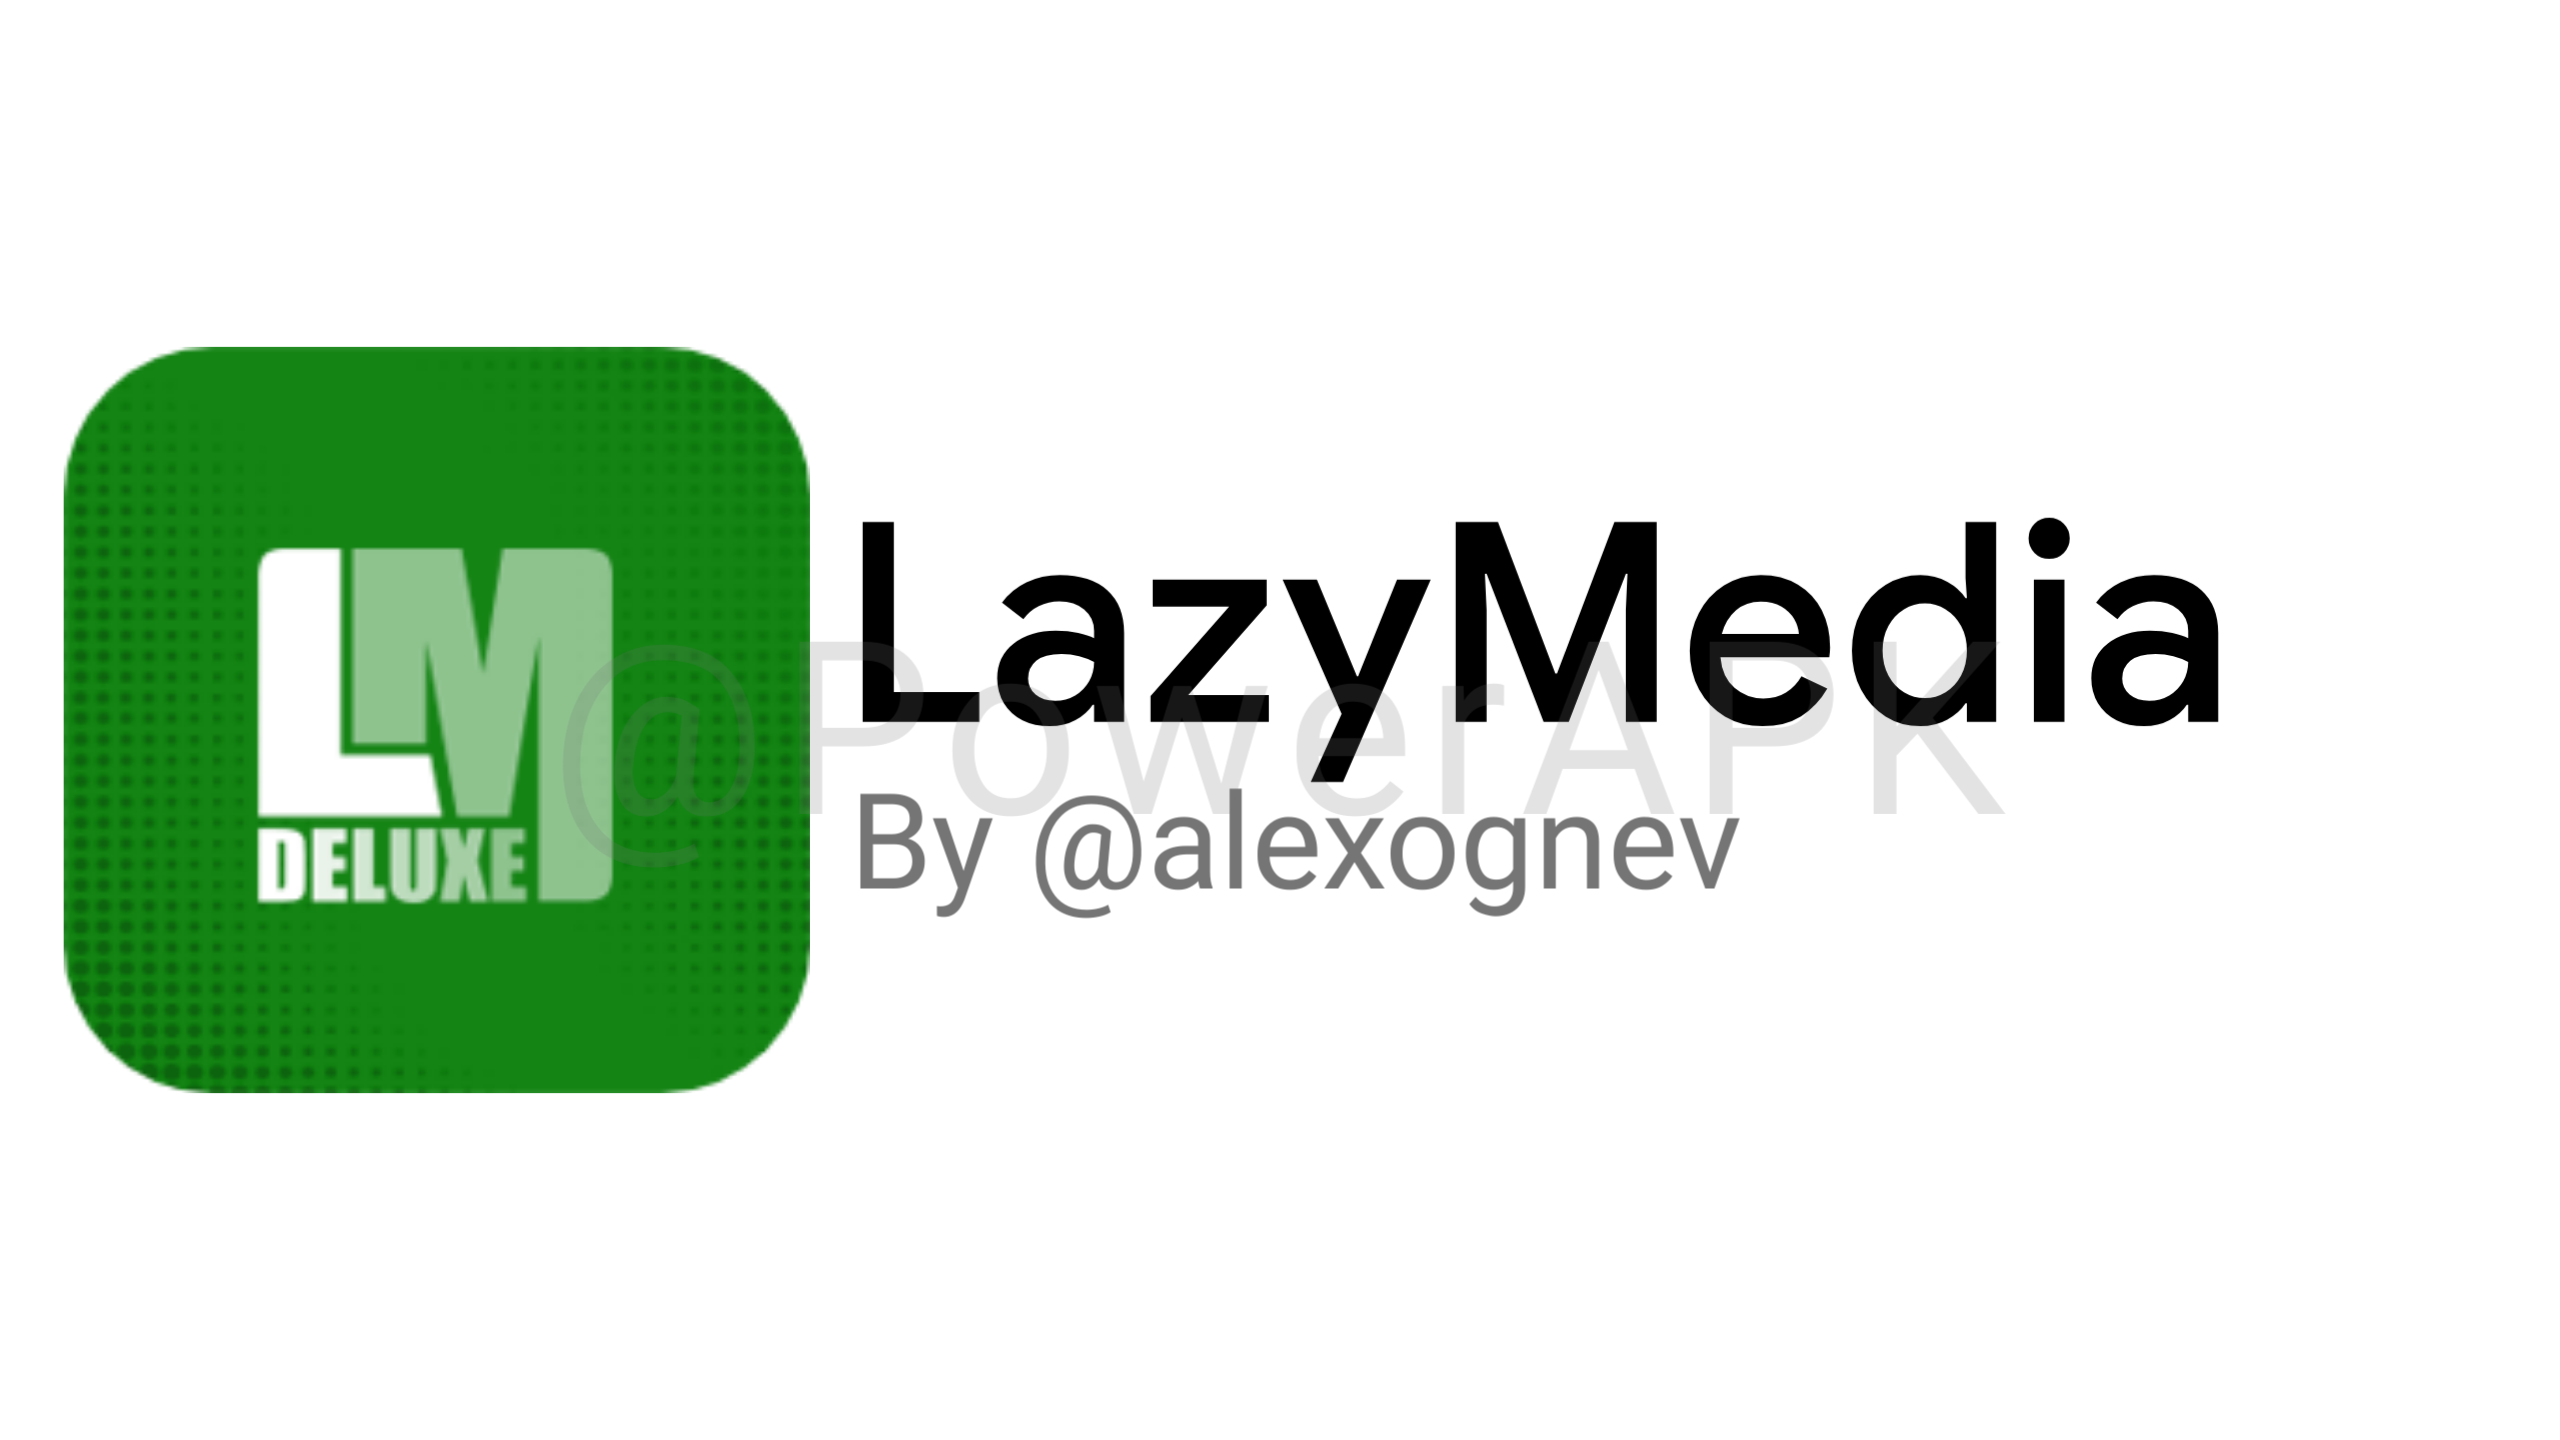 Lazy media deluxe для андроид последняя версия